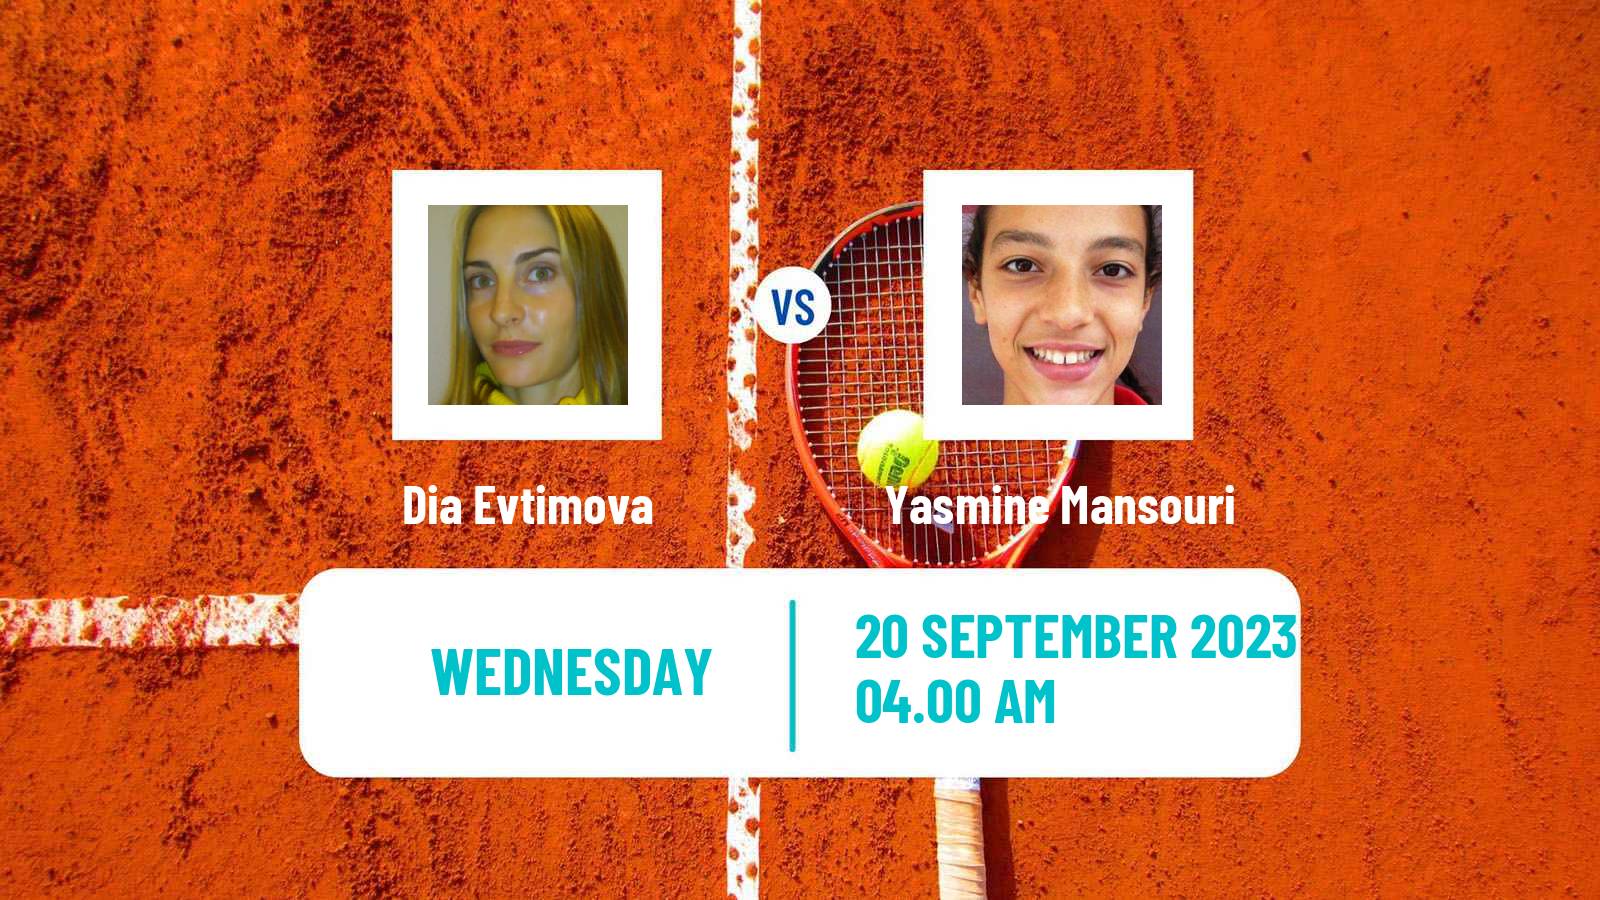 Tennis ITF W25 Santa Margherita Di Pula 6 Women Dia Evtimova - Yasmine Mansouri